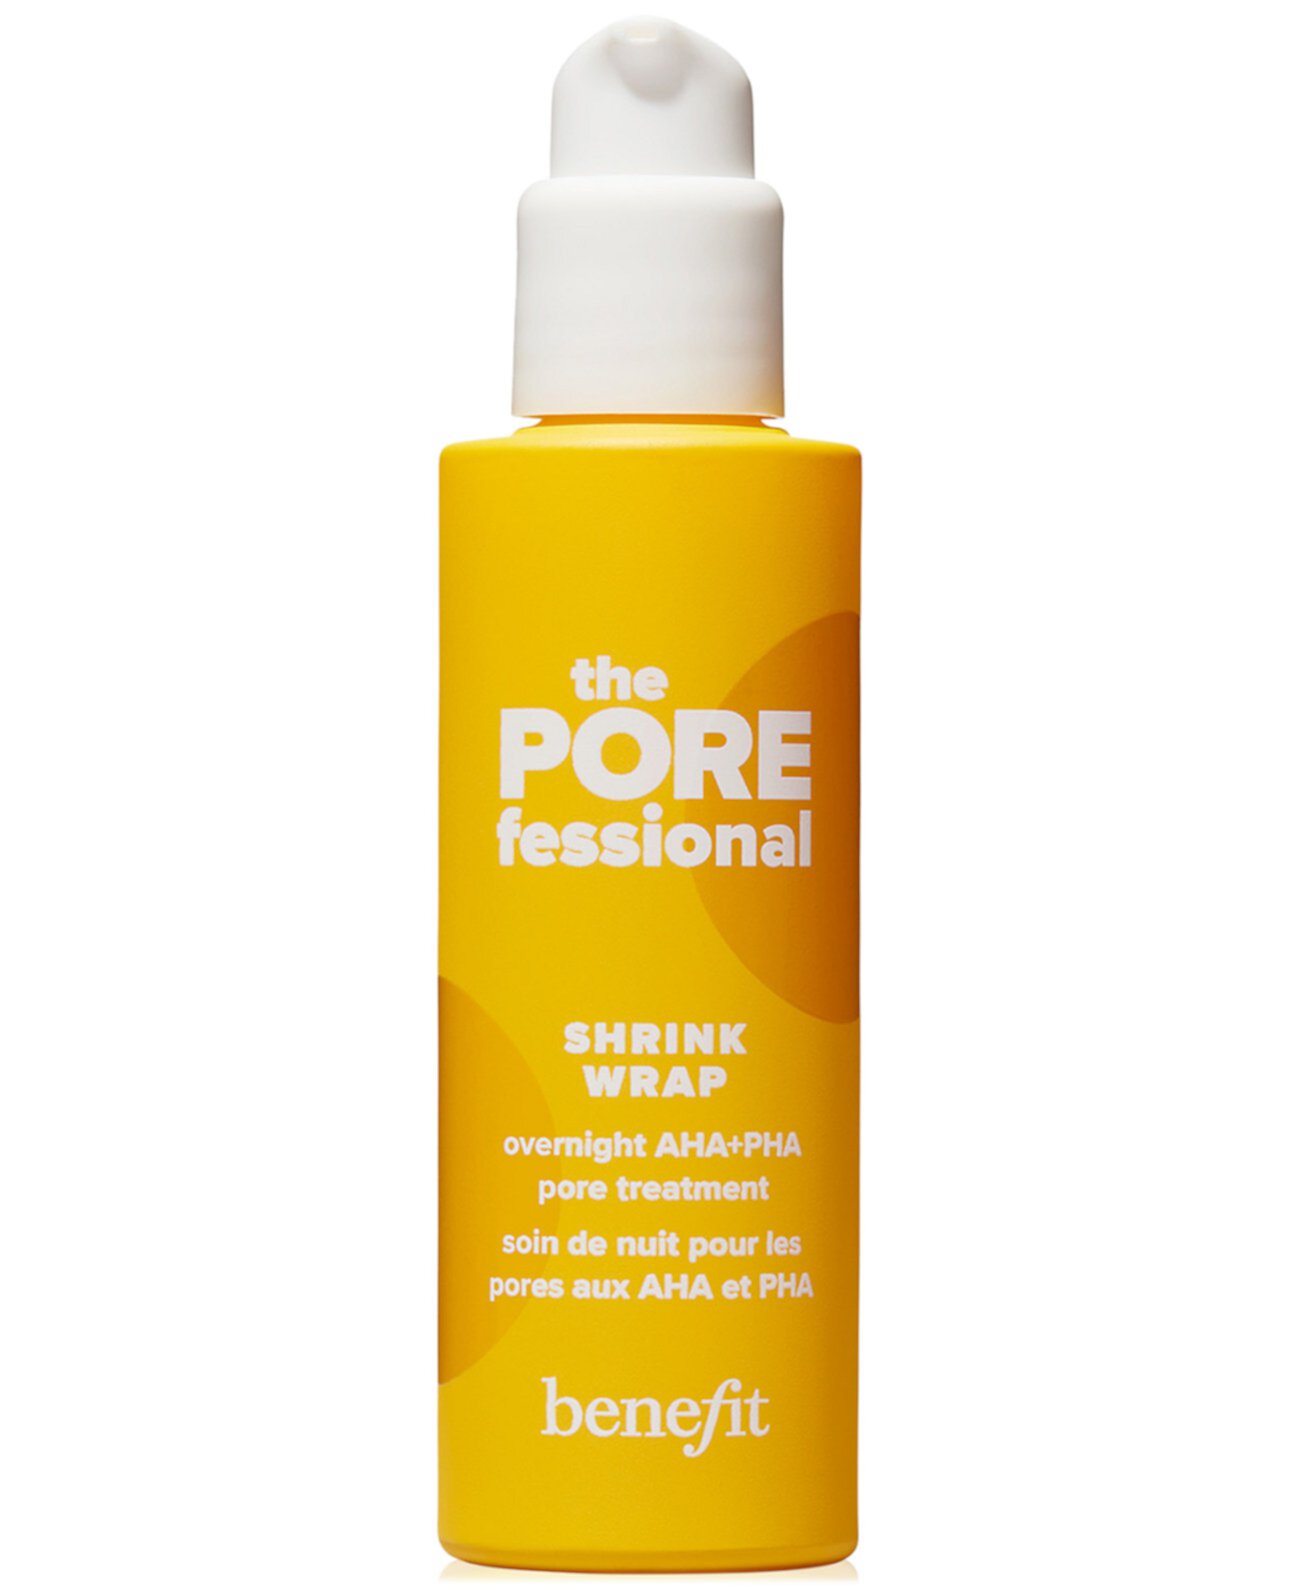 The POREfessional Shrink Wrap Overnight AHA+PHA Pore Treatment Benefit Cosmetics